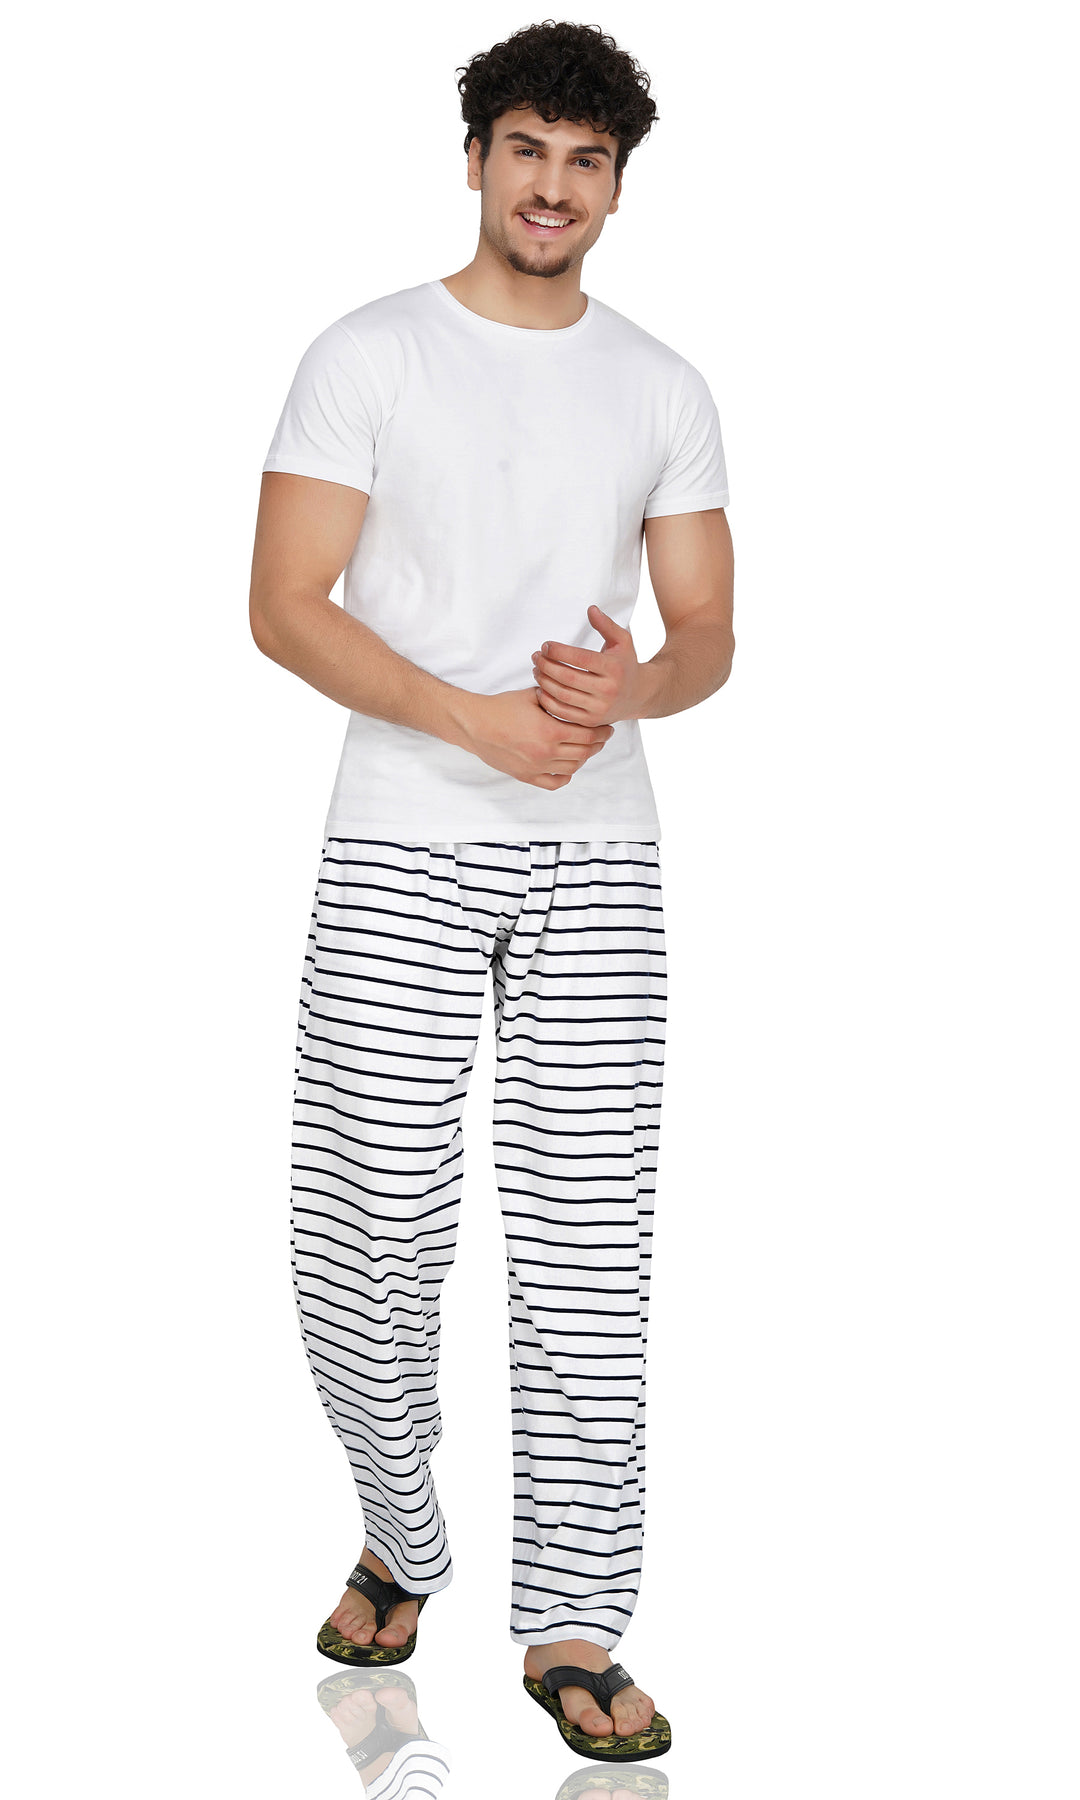 Black and White Check Pyjama